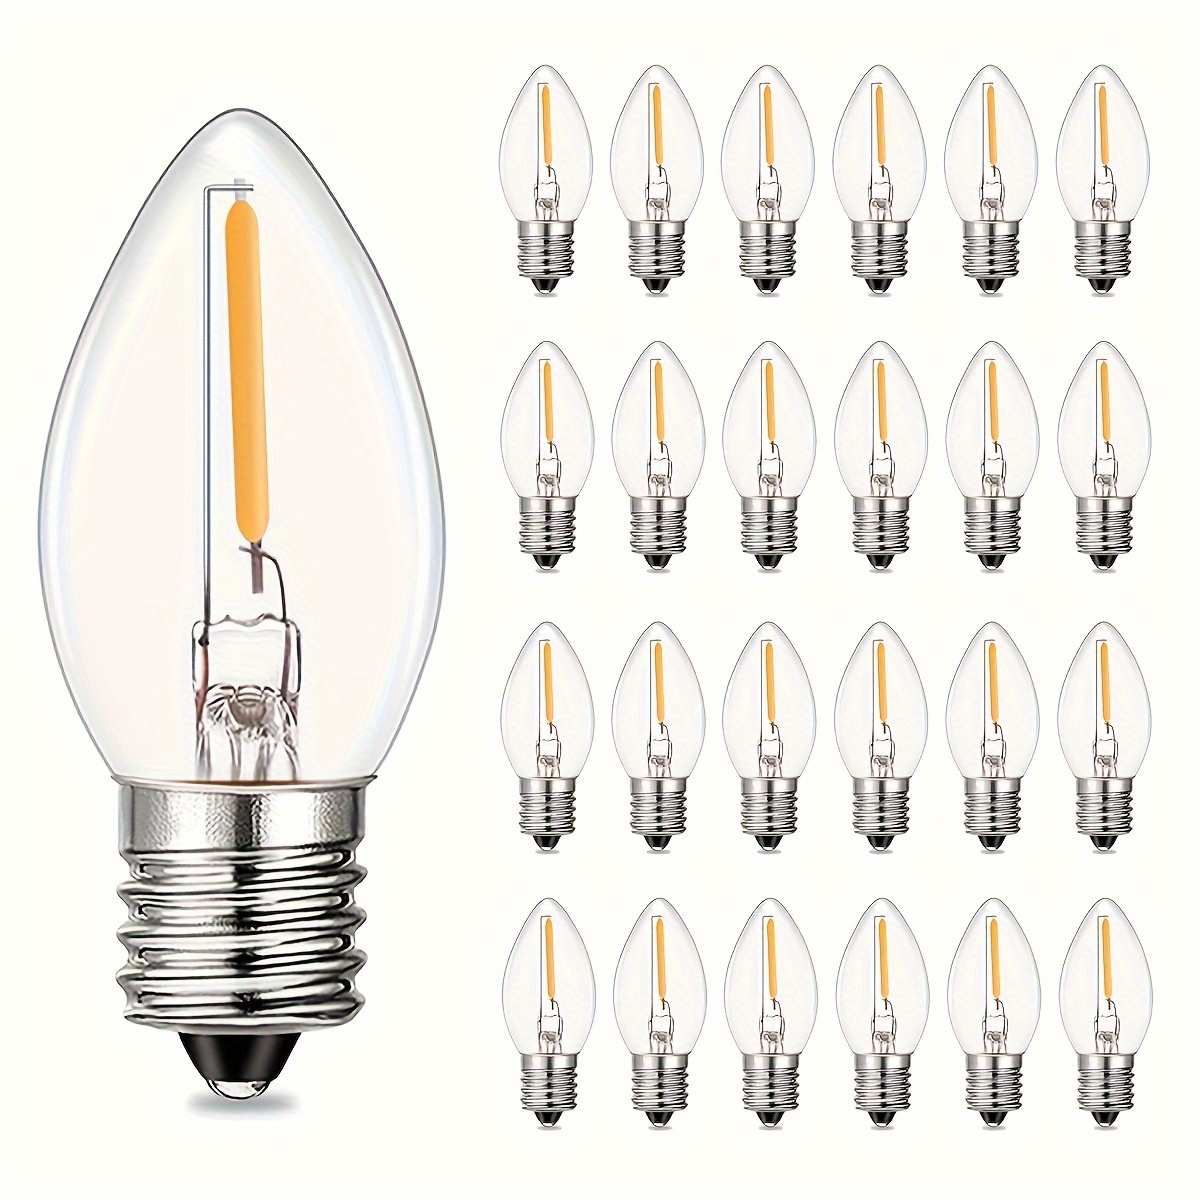 Bombilla LED para candelabro, bombilla LED regulable C35 de 2 W, base E12,  blanco cálido 2700 K, bombilla LED equivalente a 20 W, 110-120 VAC, paquete